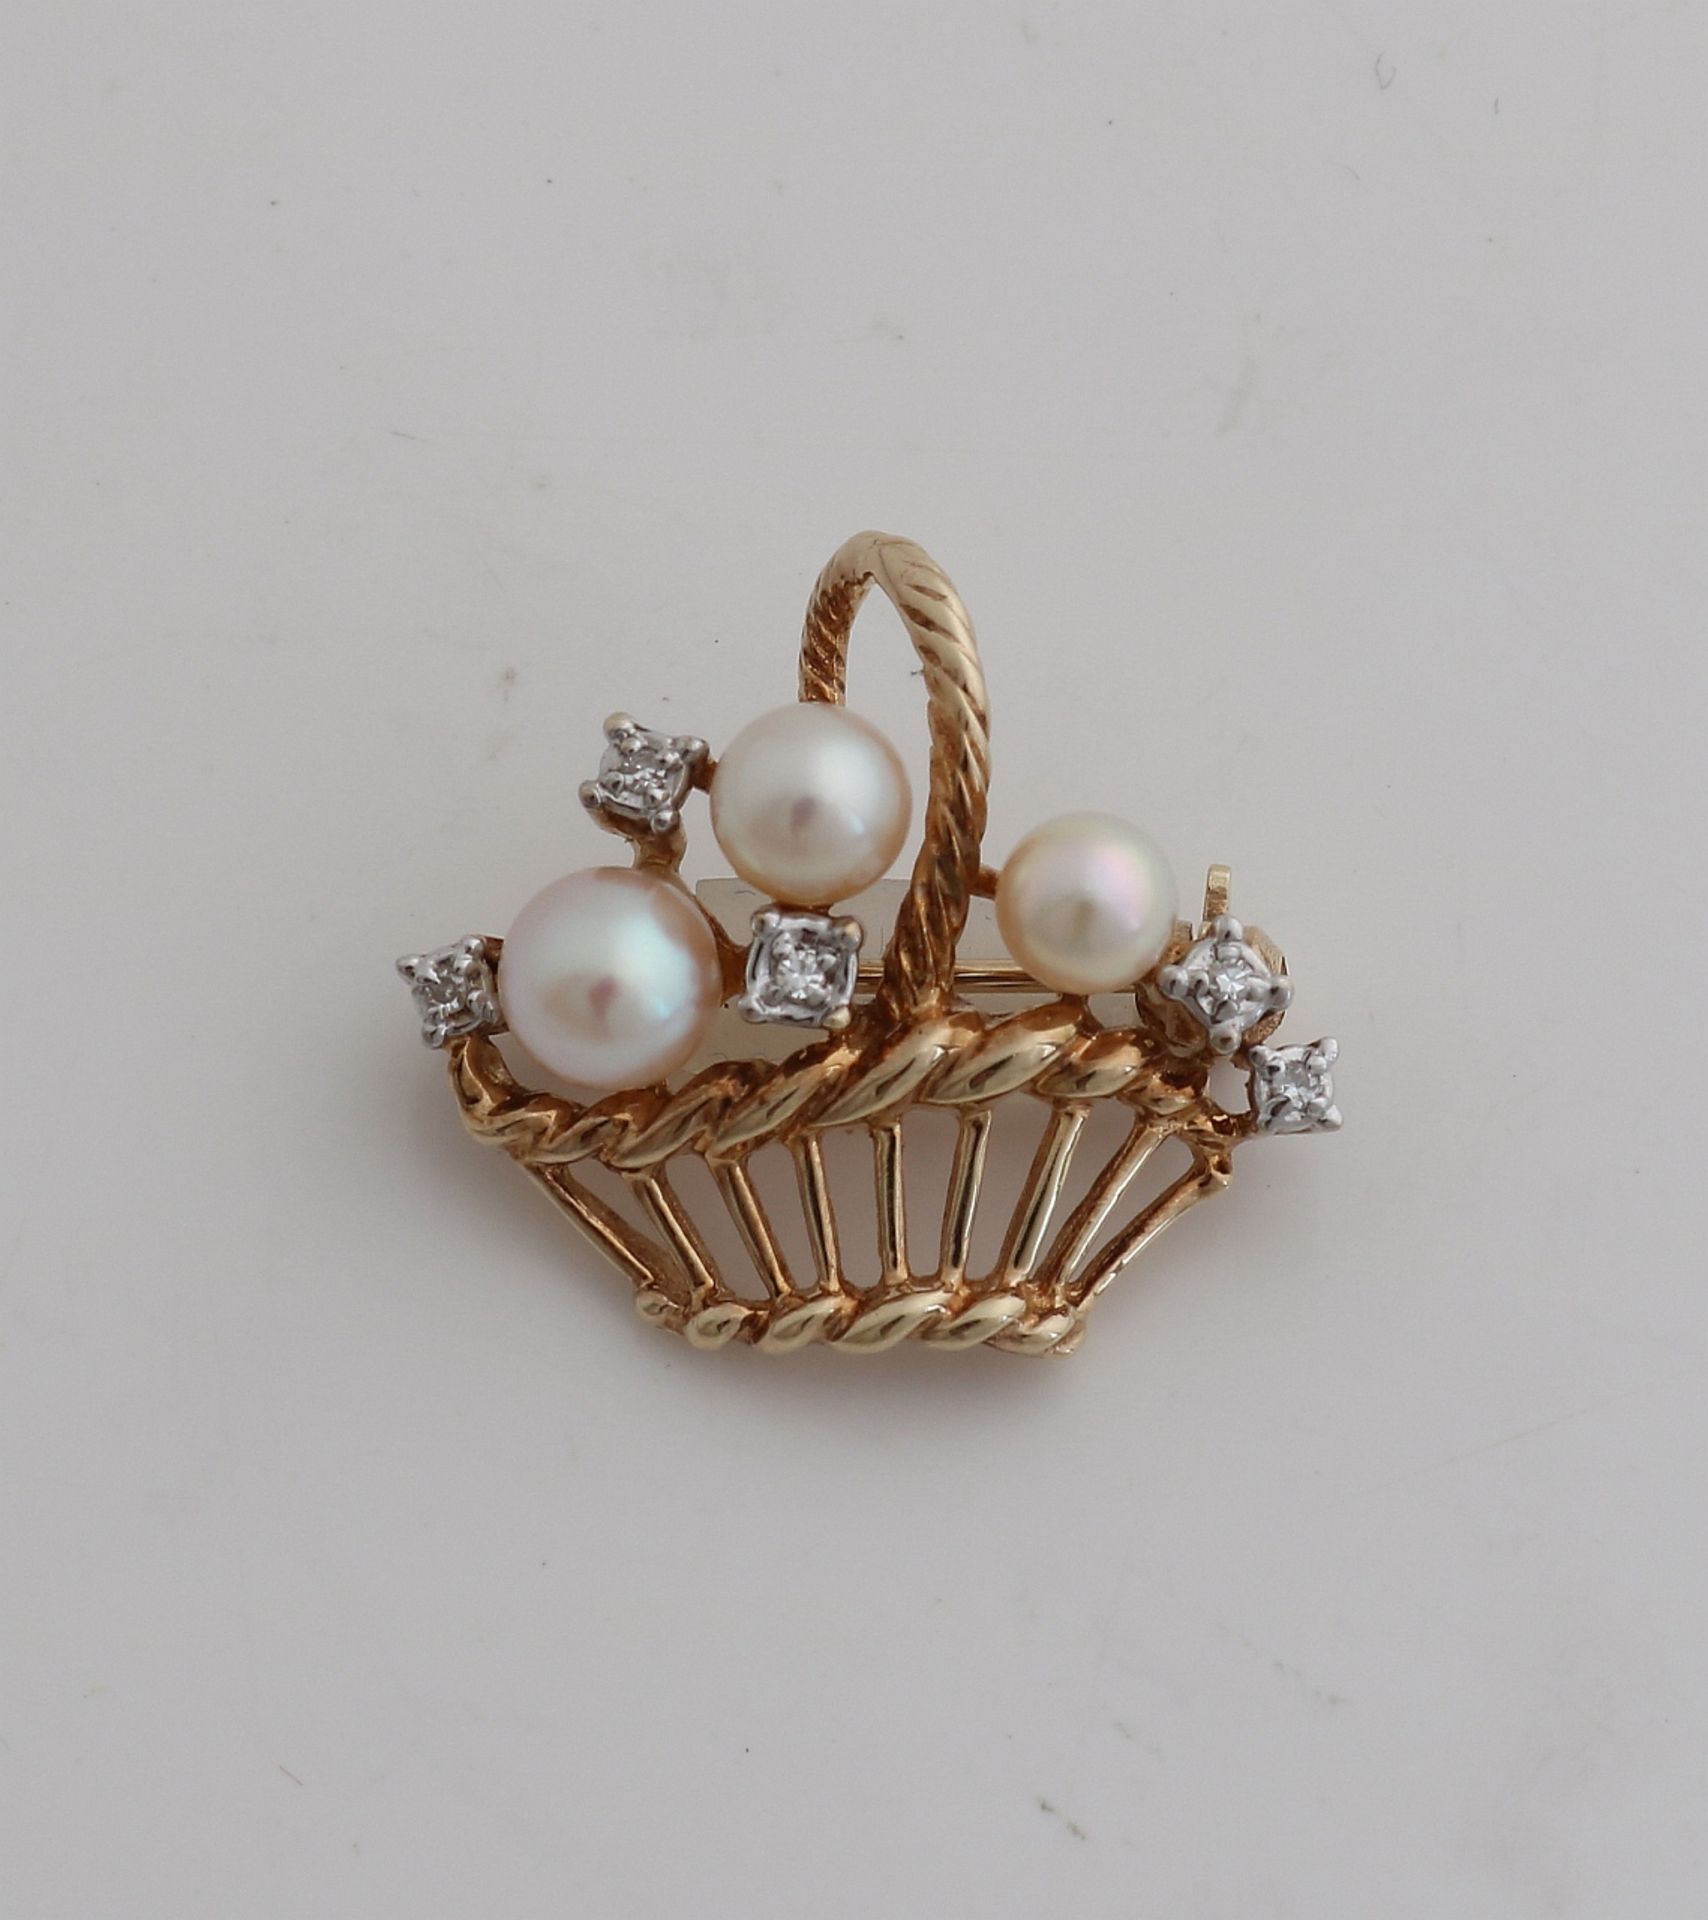 Gold brooch, basket of pearls